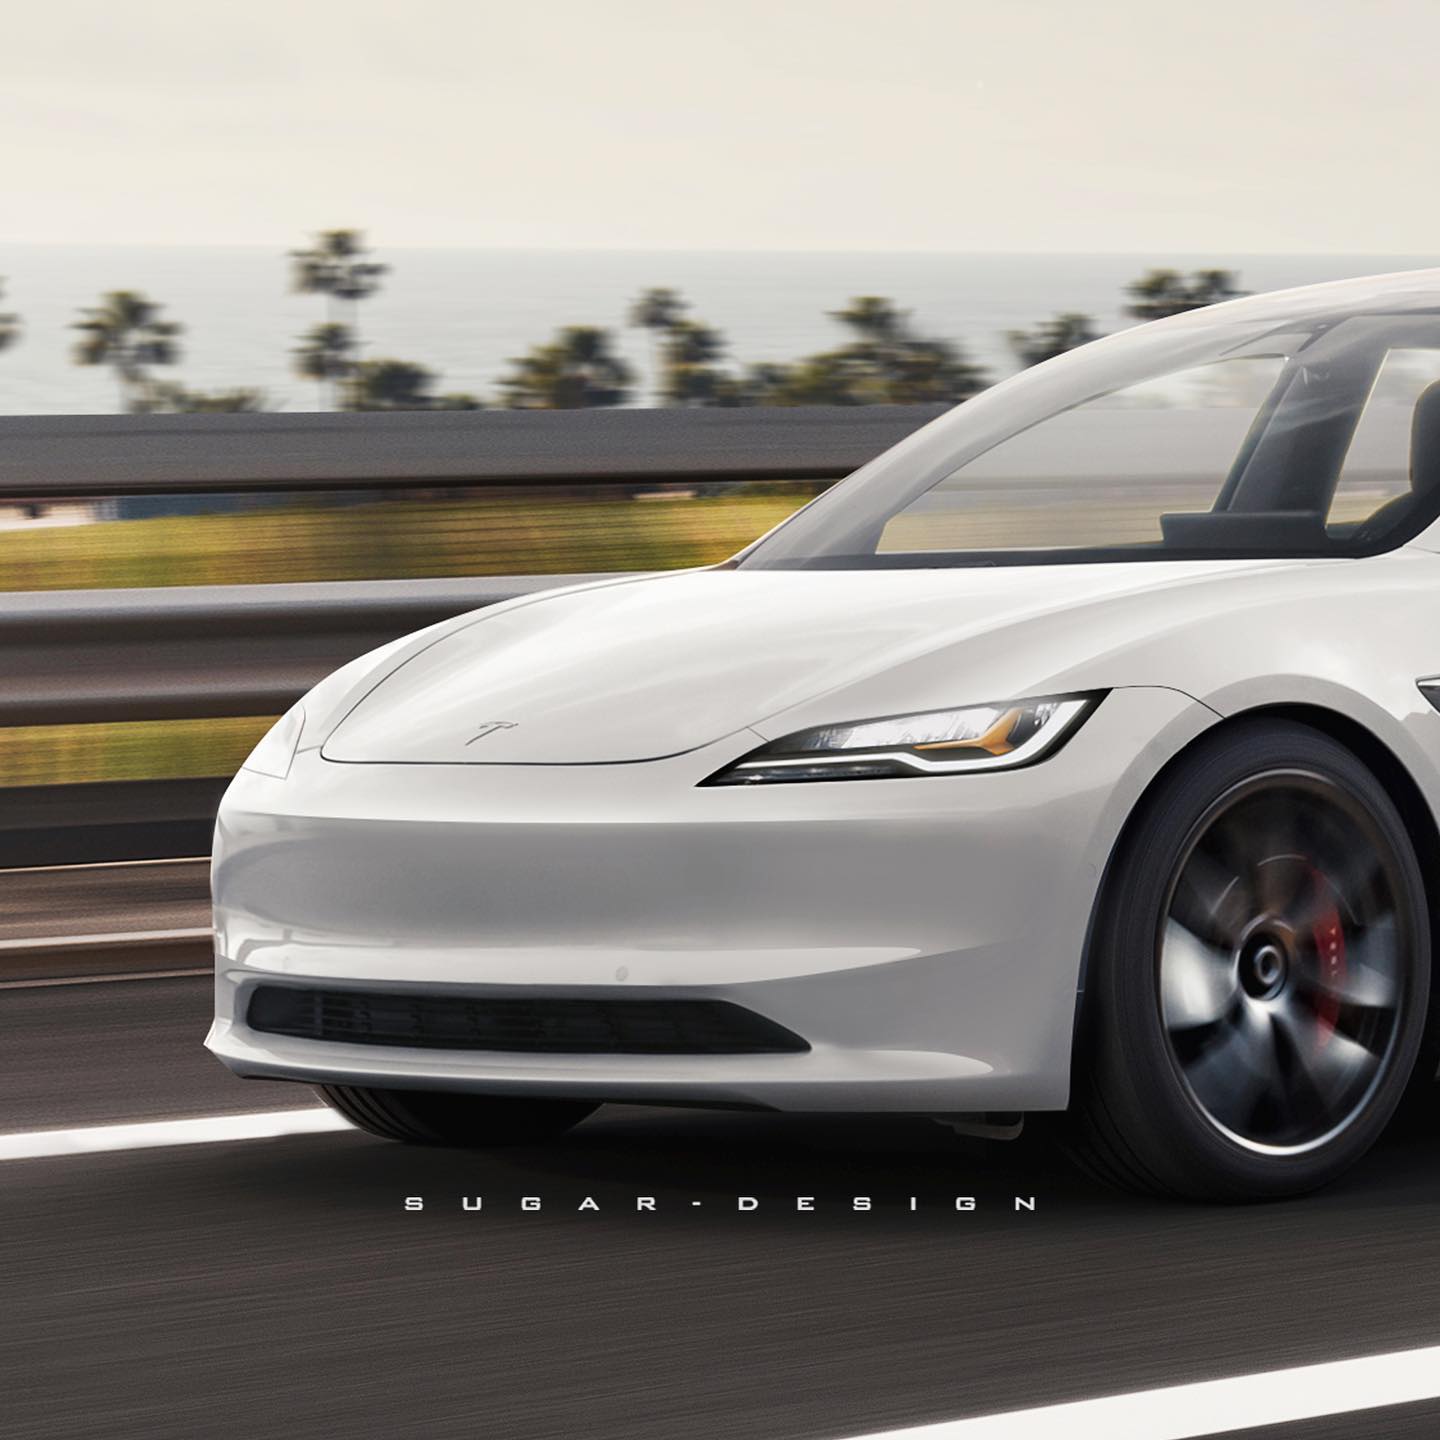 Tesla Model 3 'Project Highland' Gets Rendered One More Time